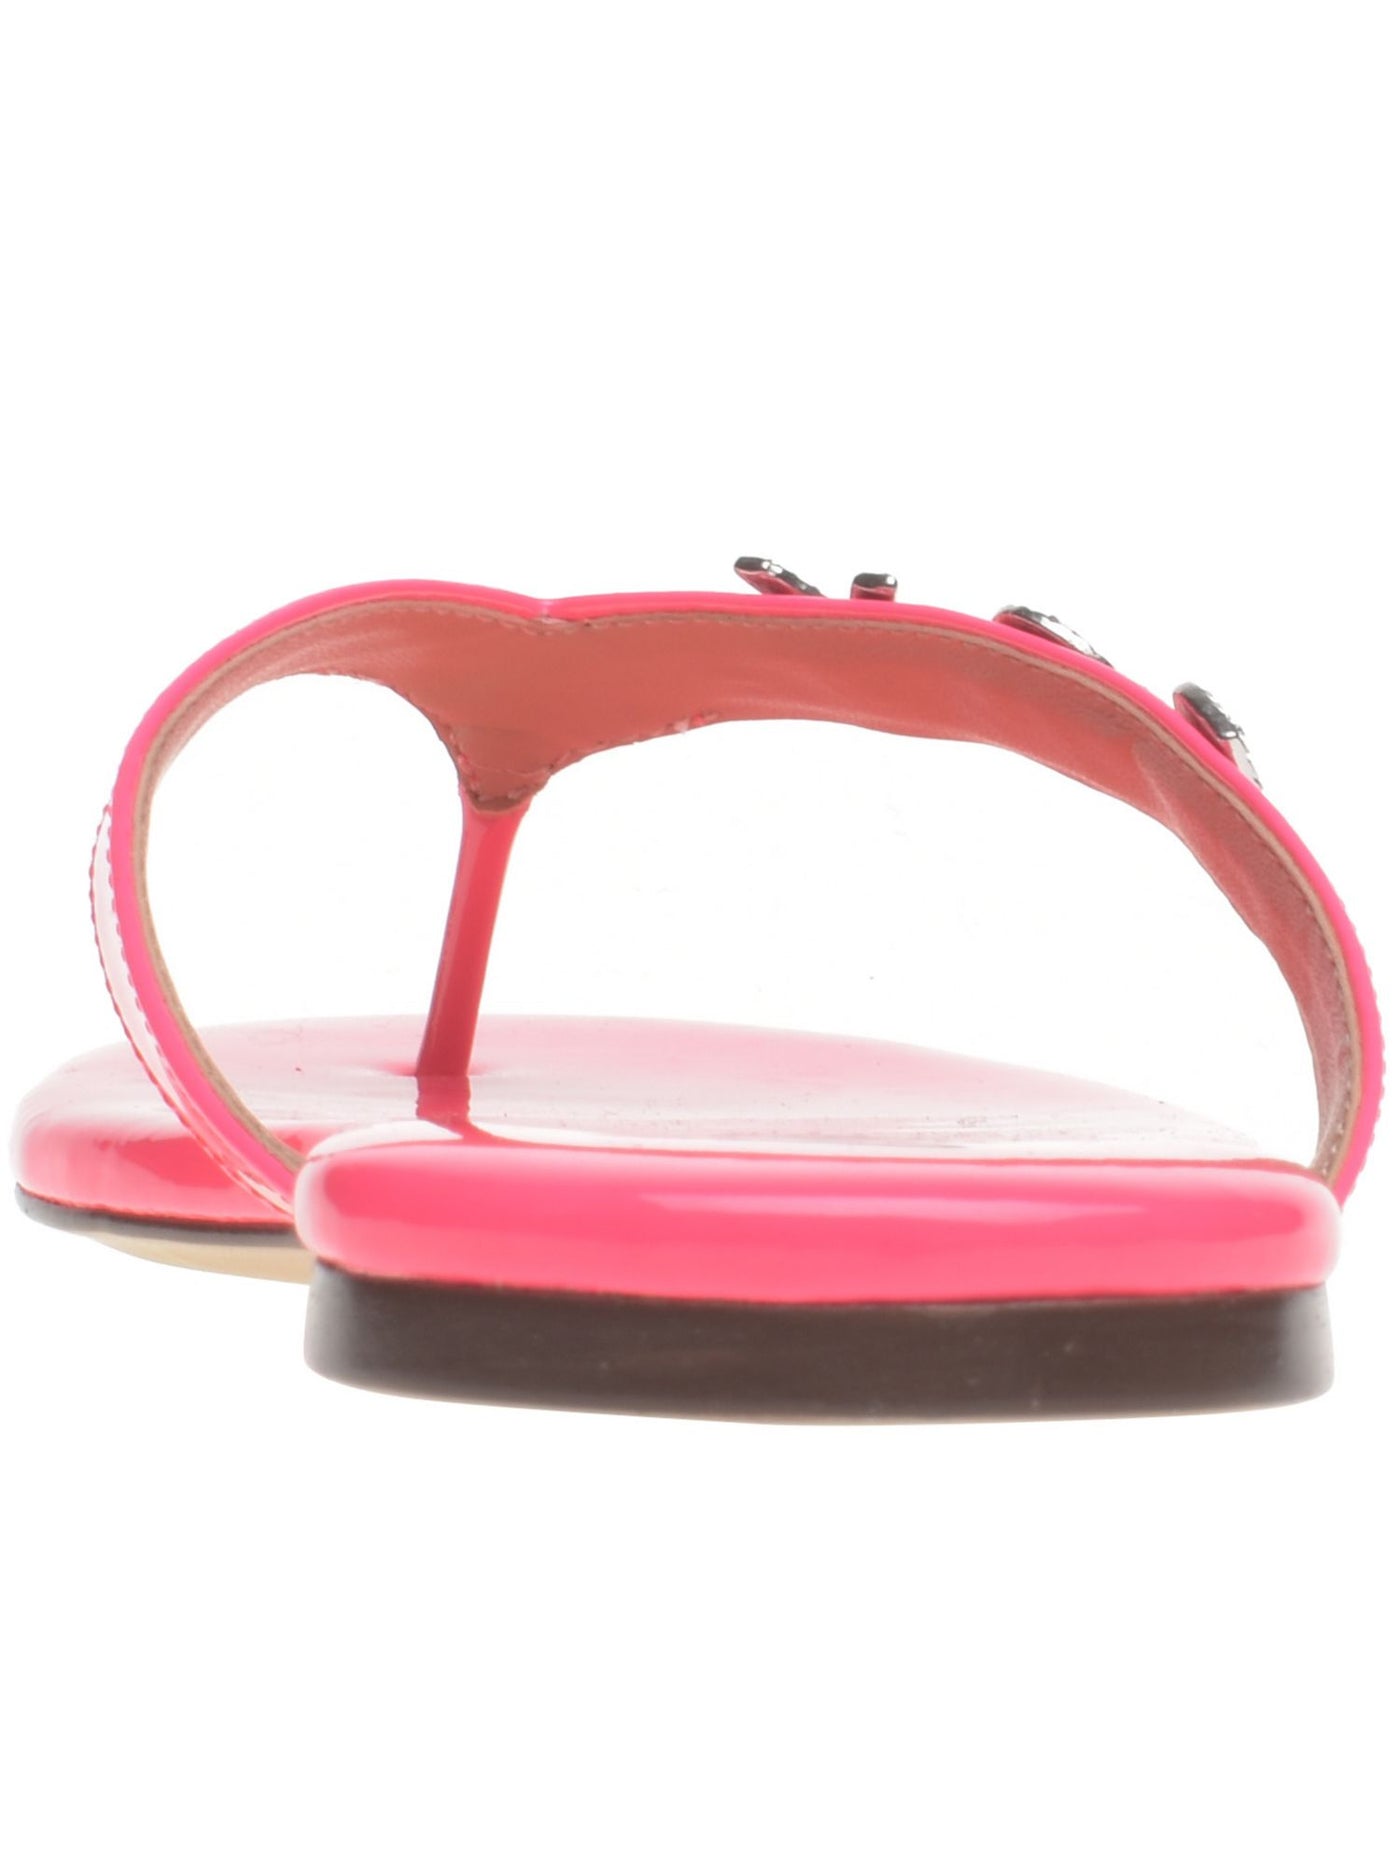 WILD PAIR Womens Pink Rhinestone Fantasia Round Toe Slip On Thong Sandals Shoes 10 M